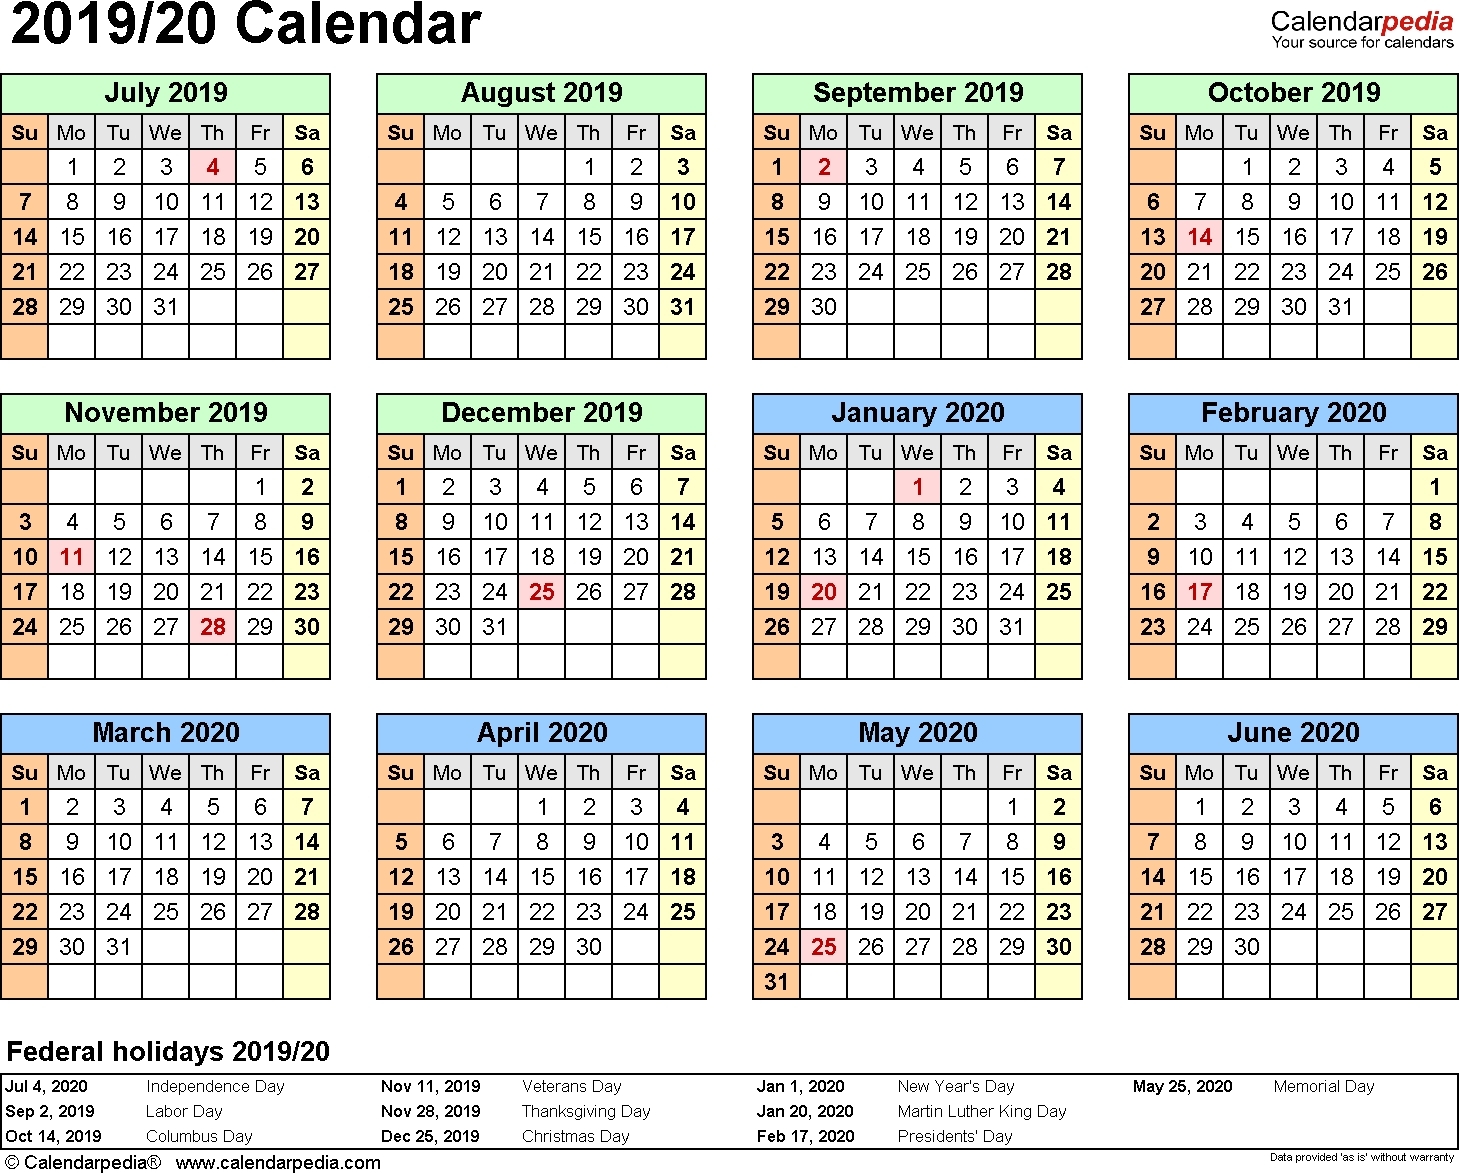 Free Printable 2020 Calendar With Holidays South Africa Exceptional Free Printable Calenders 2020 South Africa